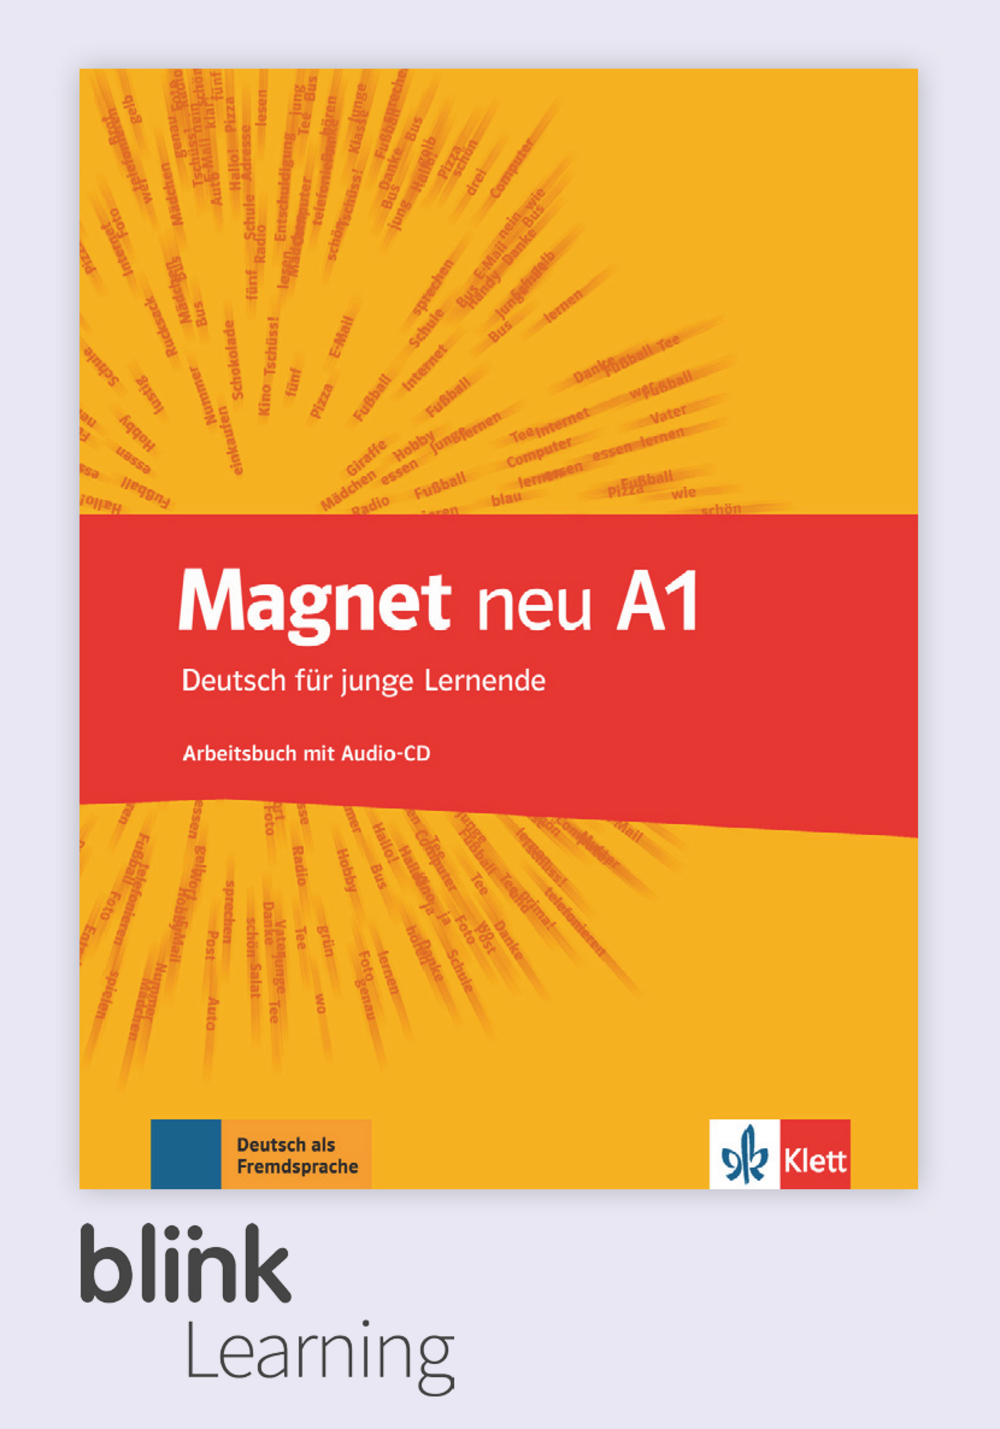 Magnet neu A1 Digital Arbeitsbuch fur Unterrichtende / Цифровая рабочая тетрадь для учителя